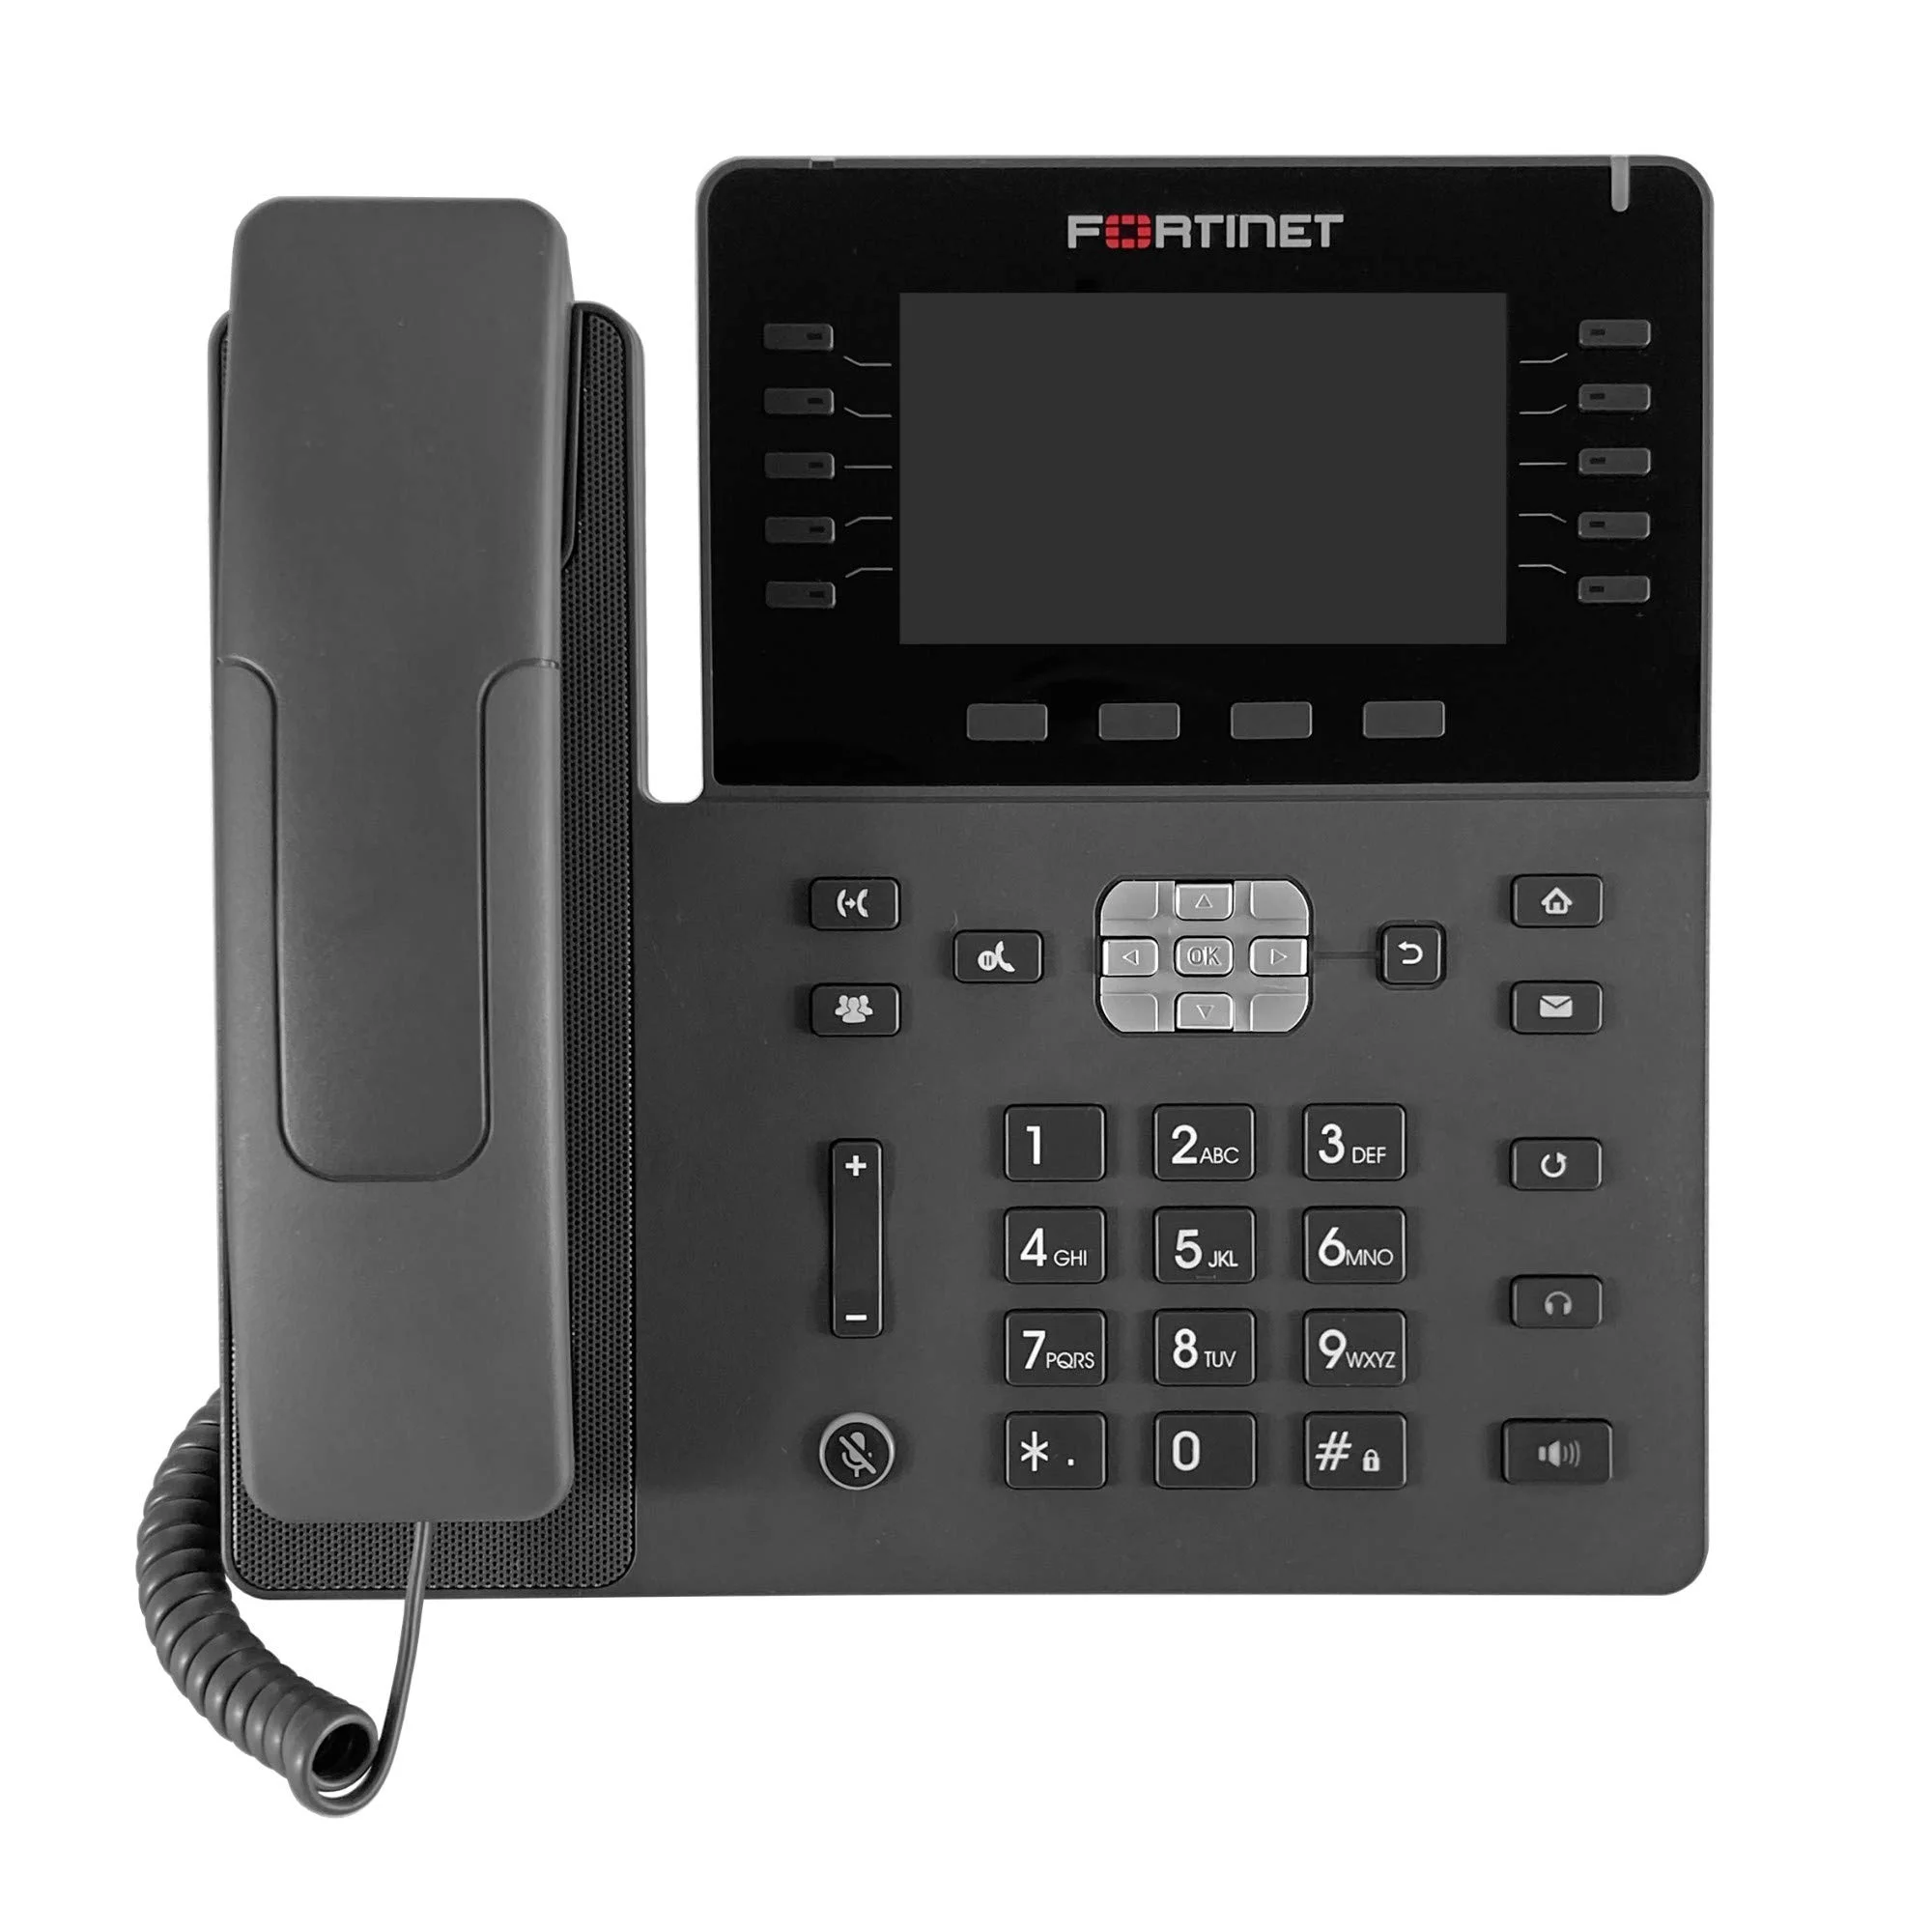 Fortinet FON-480 IP Phone